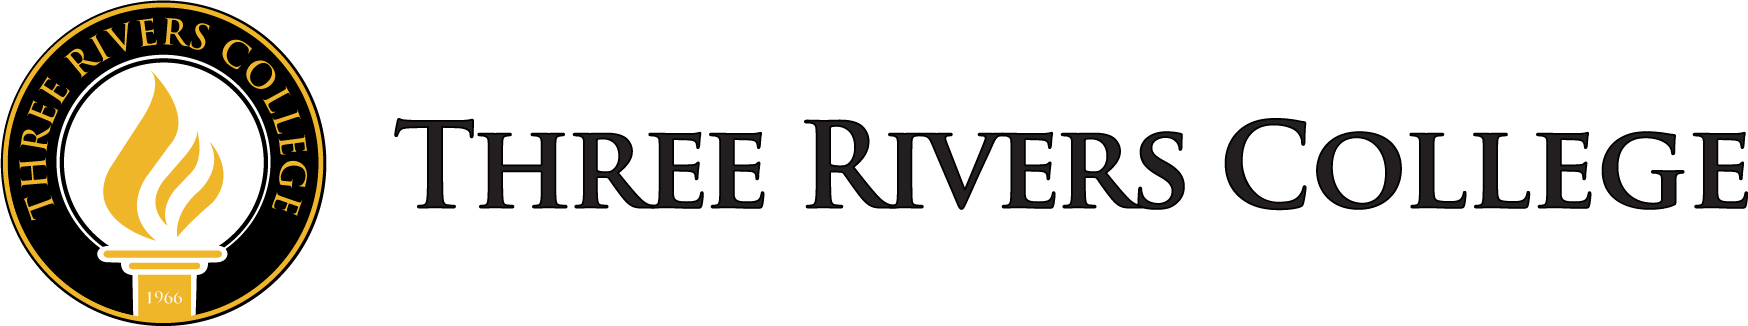 Three Rivers Logo - Three Rivers College